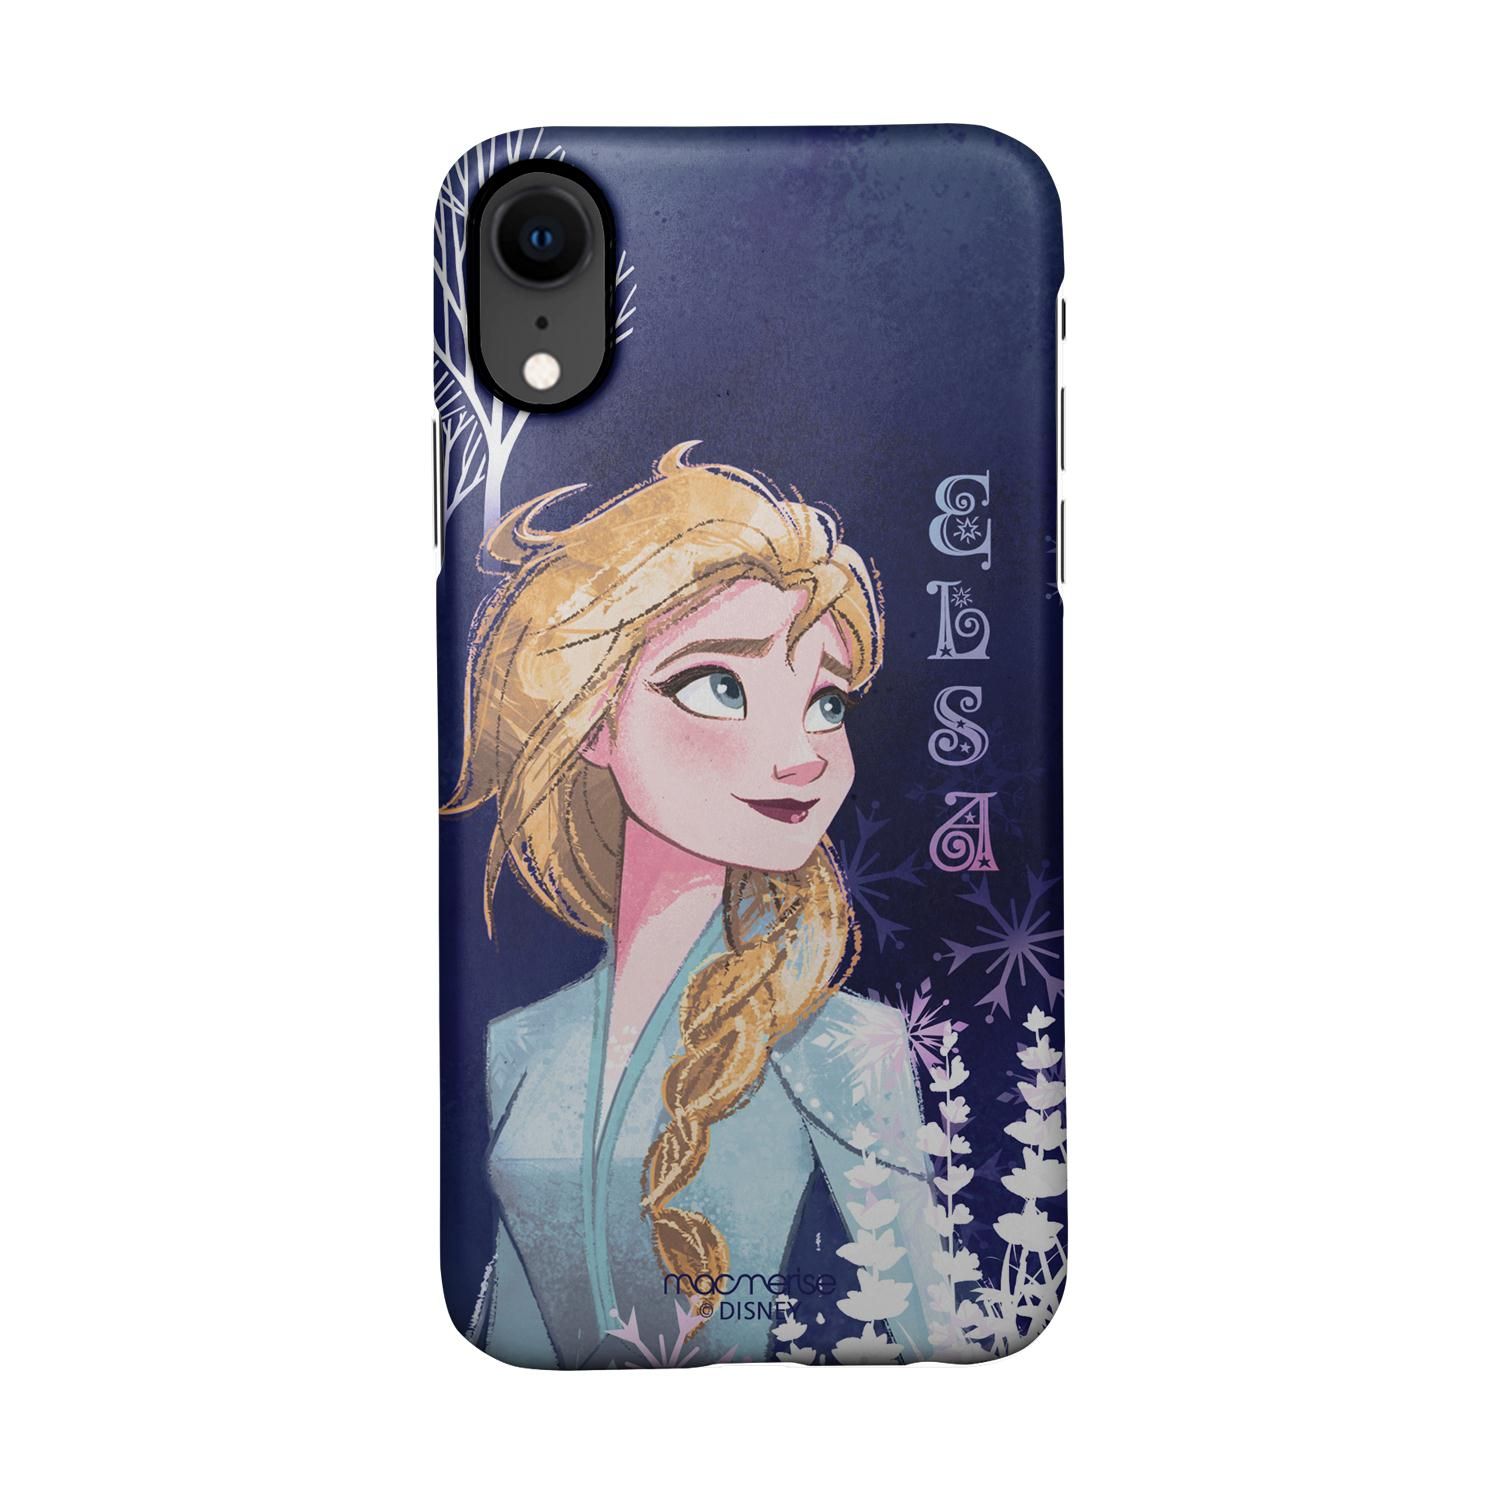 Buy Strong Elsa - Sleek Phone Case for iPhone XR Online